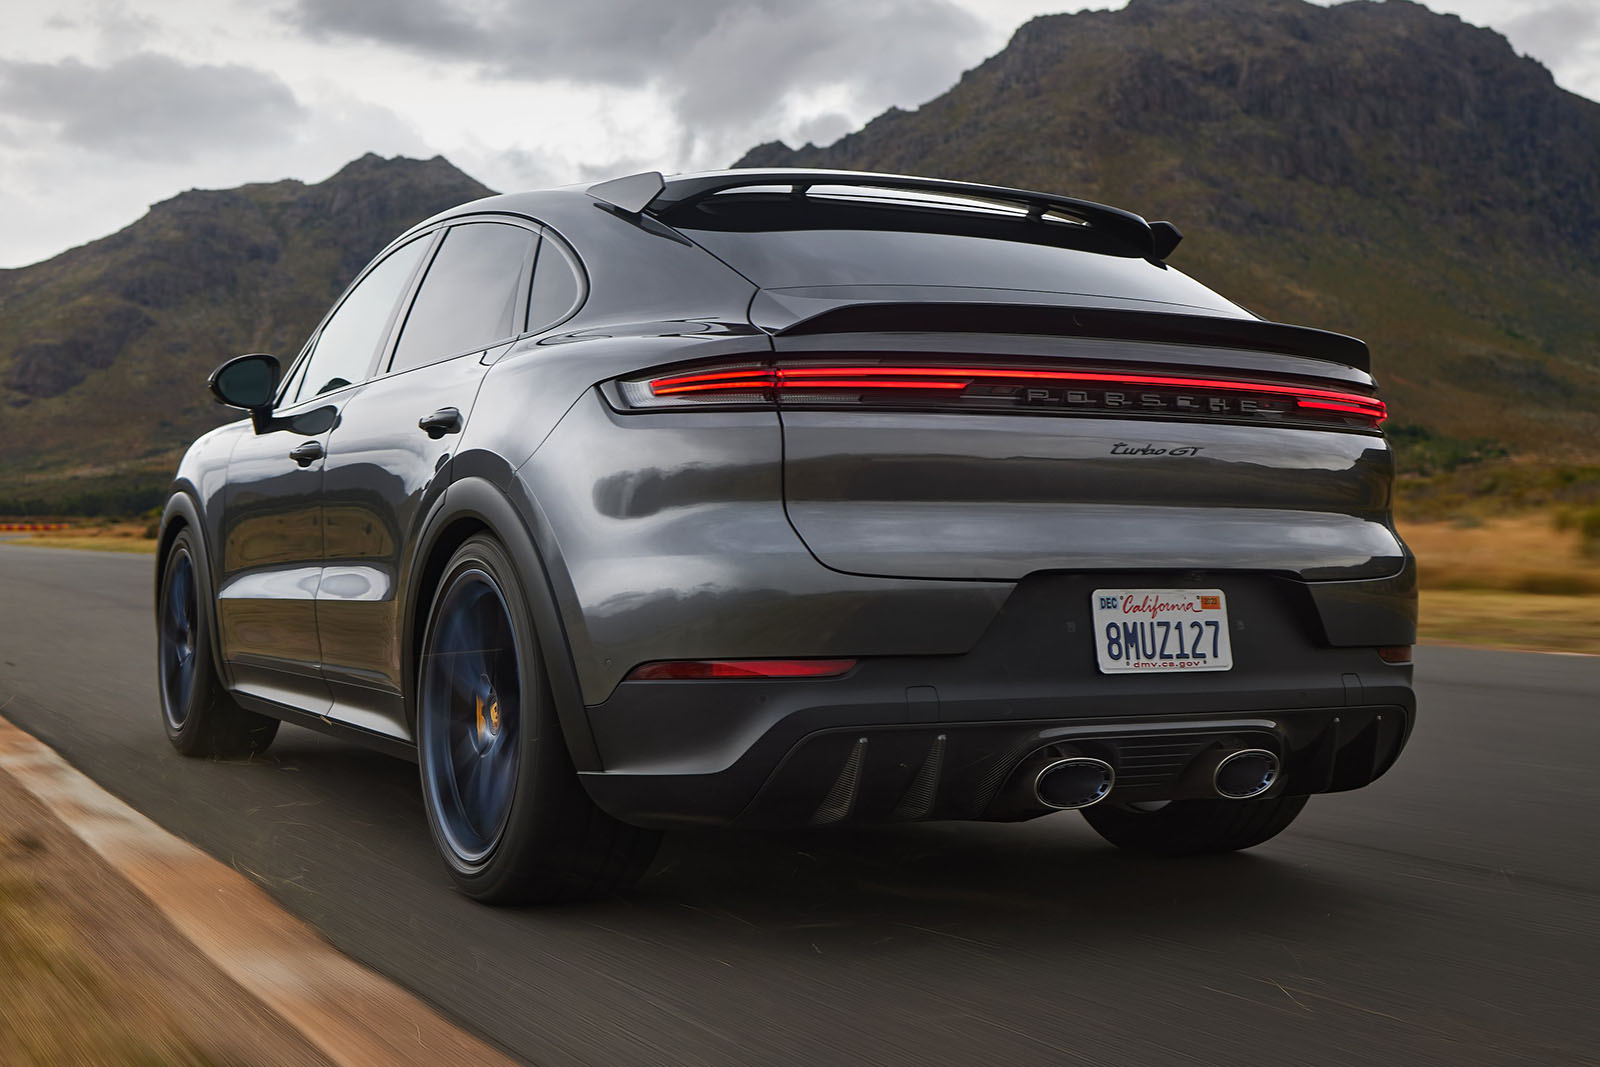 New-look Porsche Cayenne gets power, EV range and tech boosts